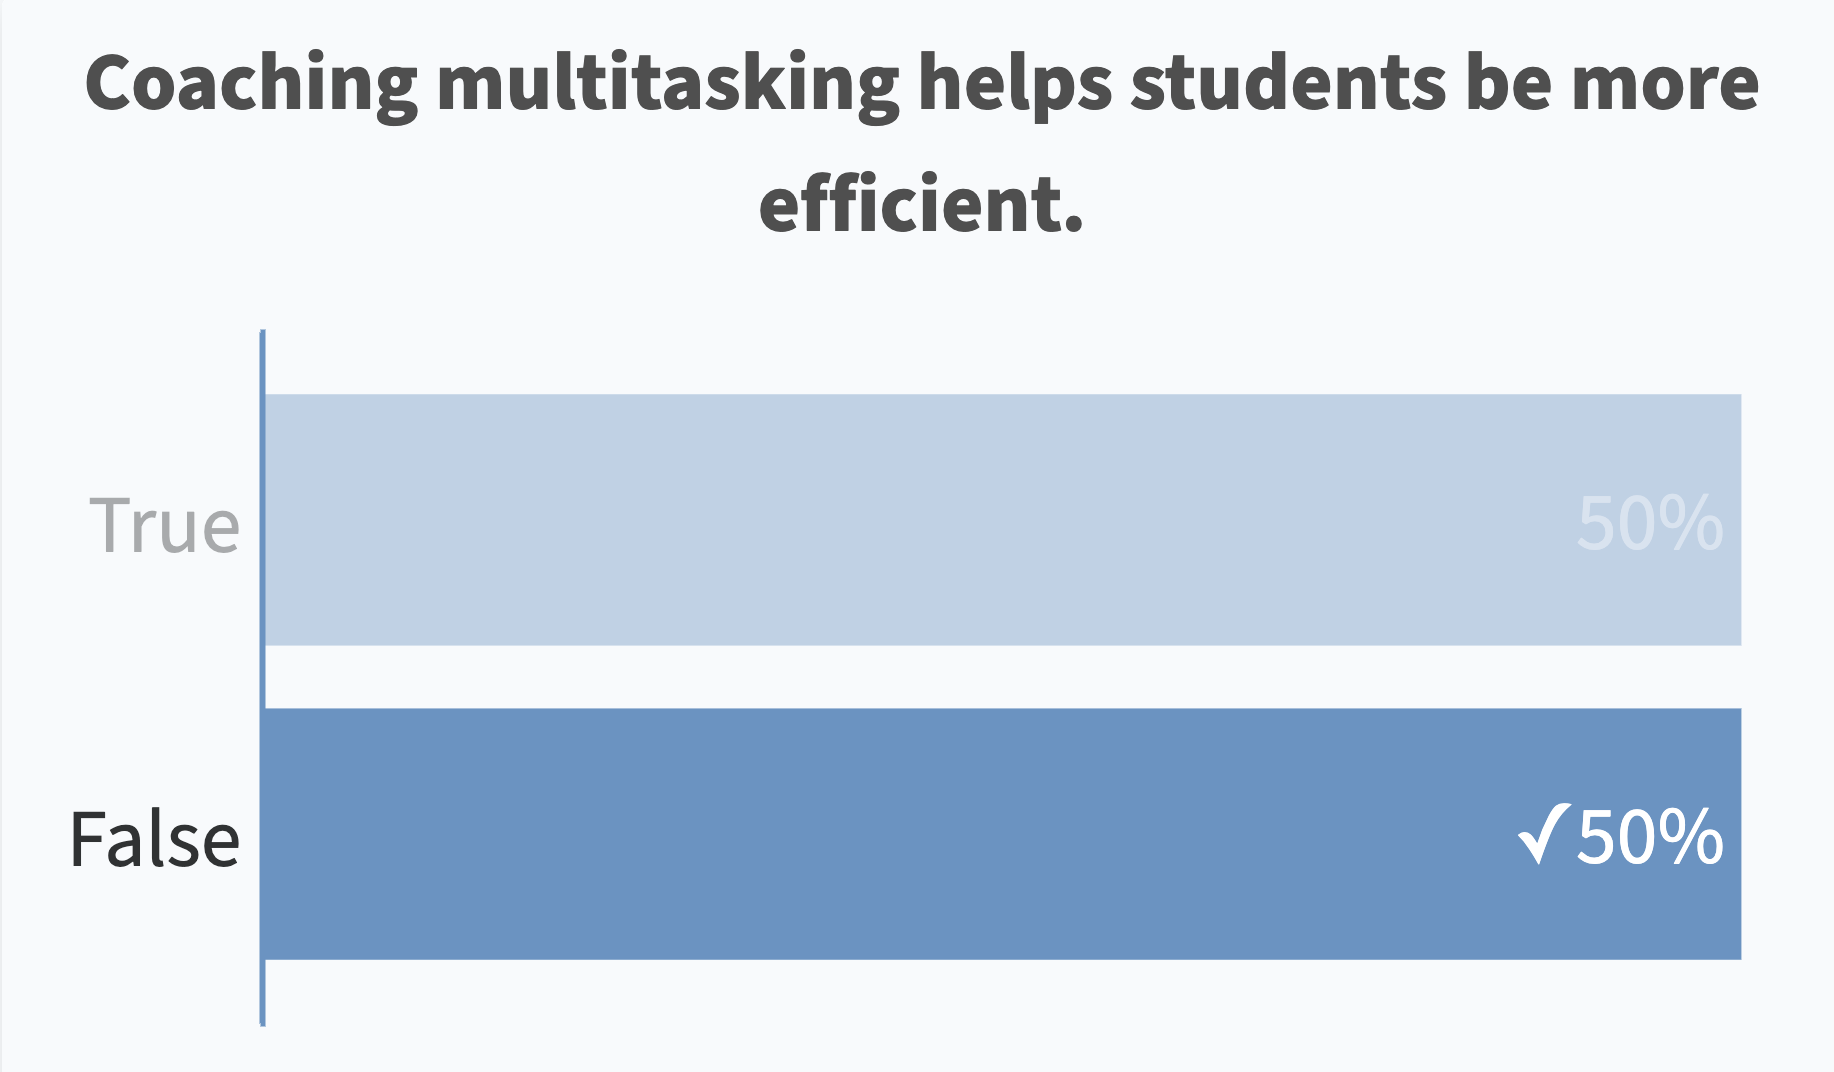 Coaching multitasking helps students be more efficient. (False: 50% correct)